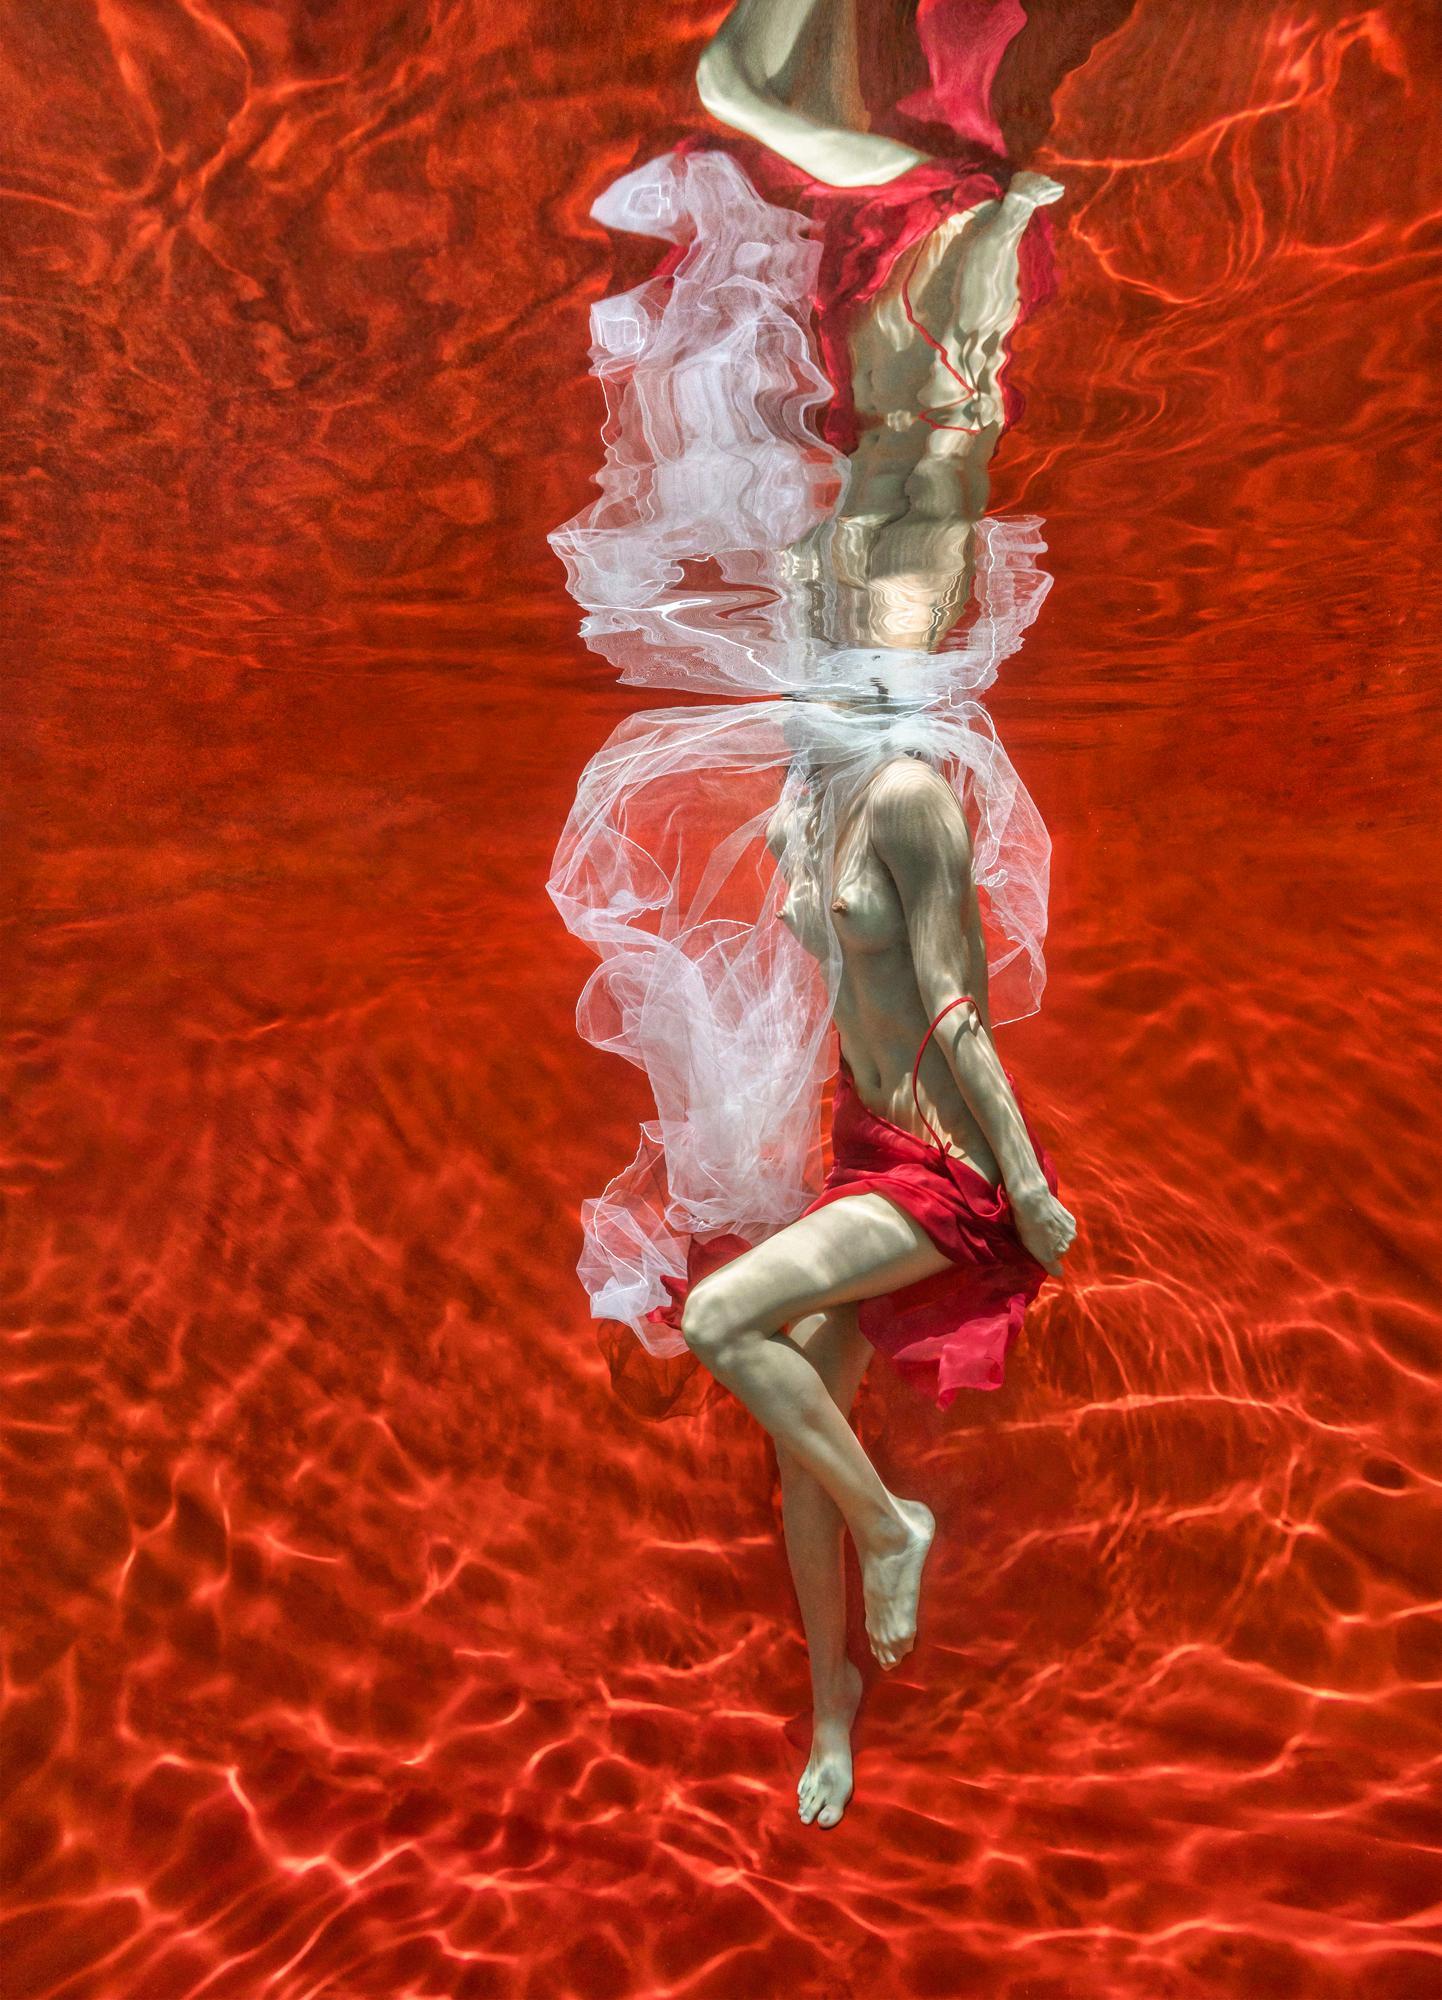 Blood and Milk III   - underwater nude photograph - print on aluminum 36x24"